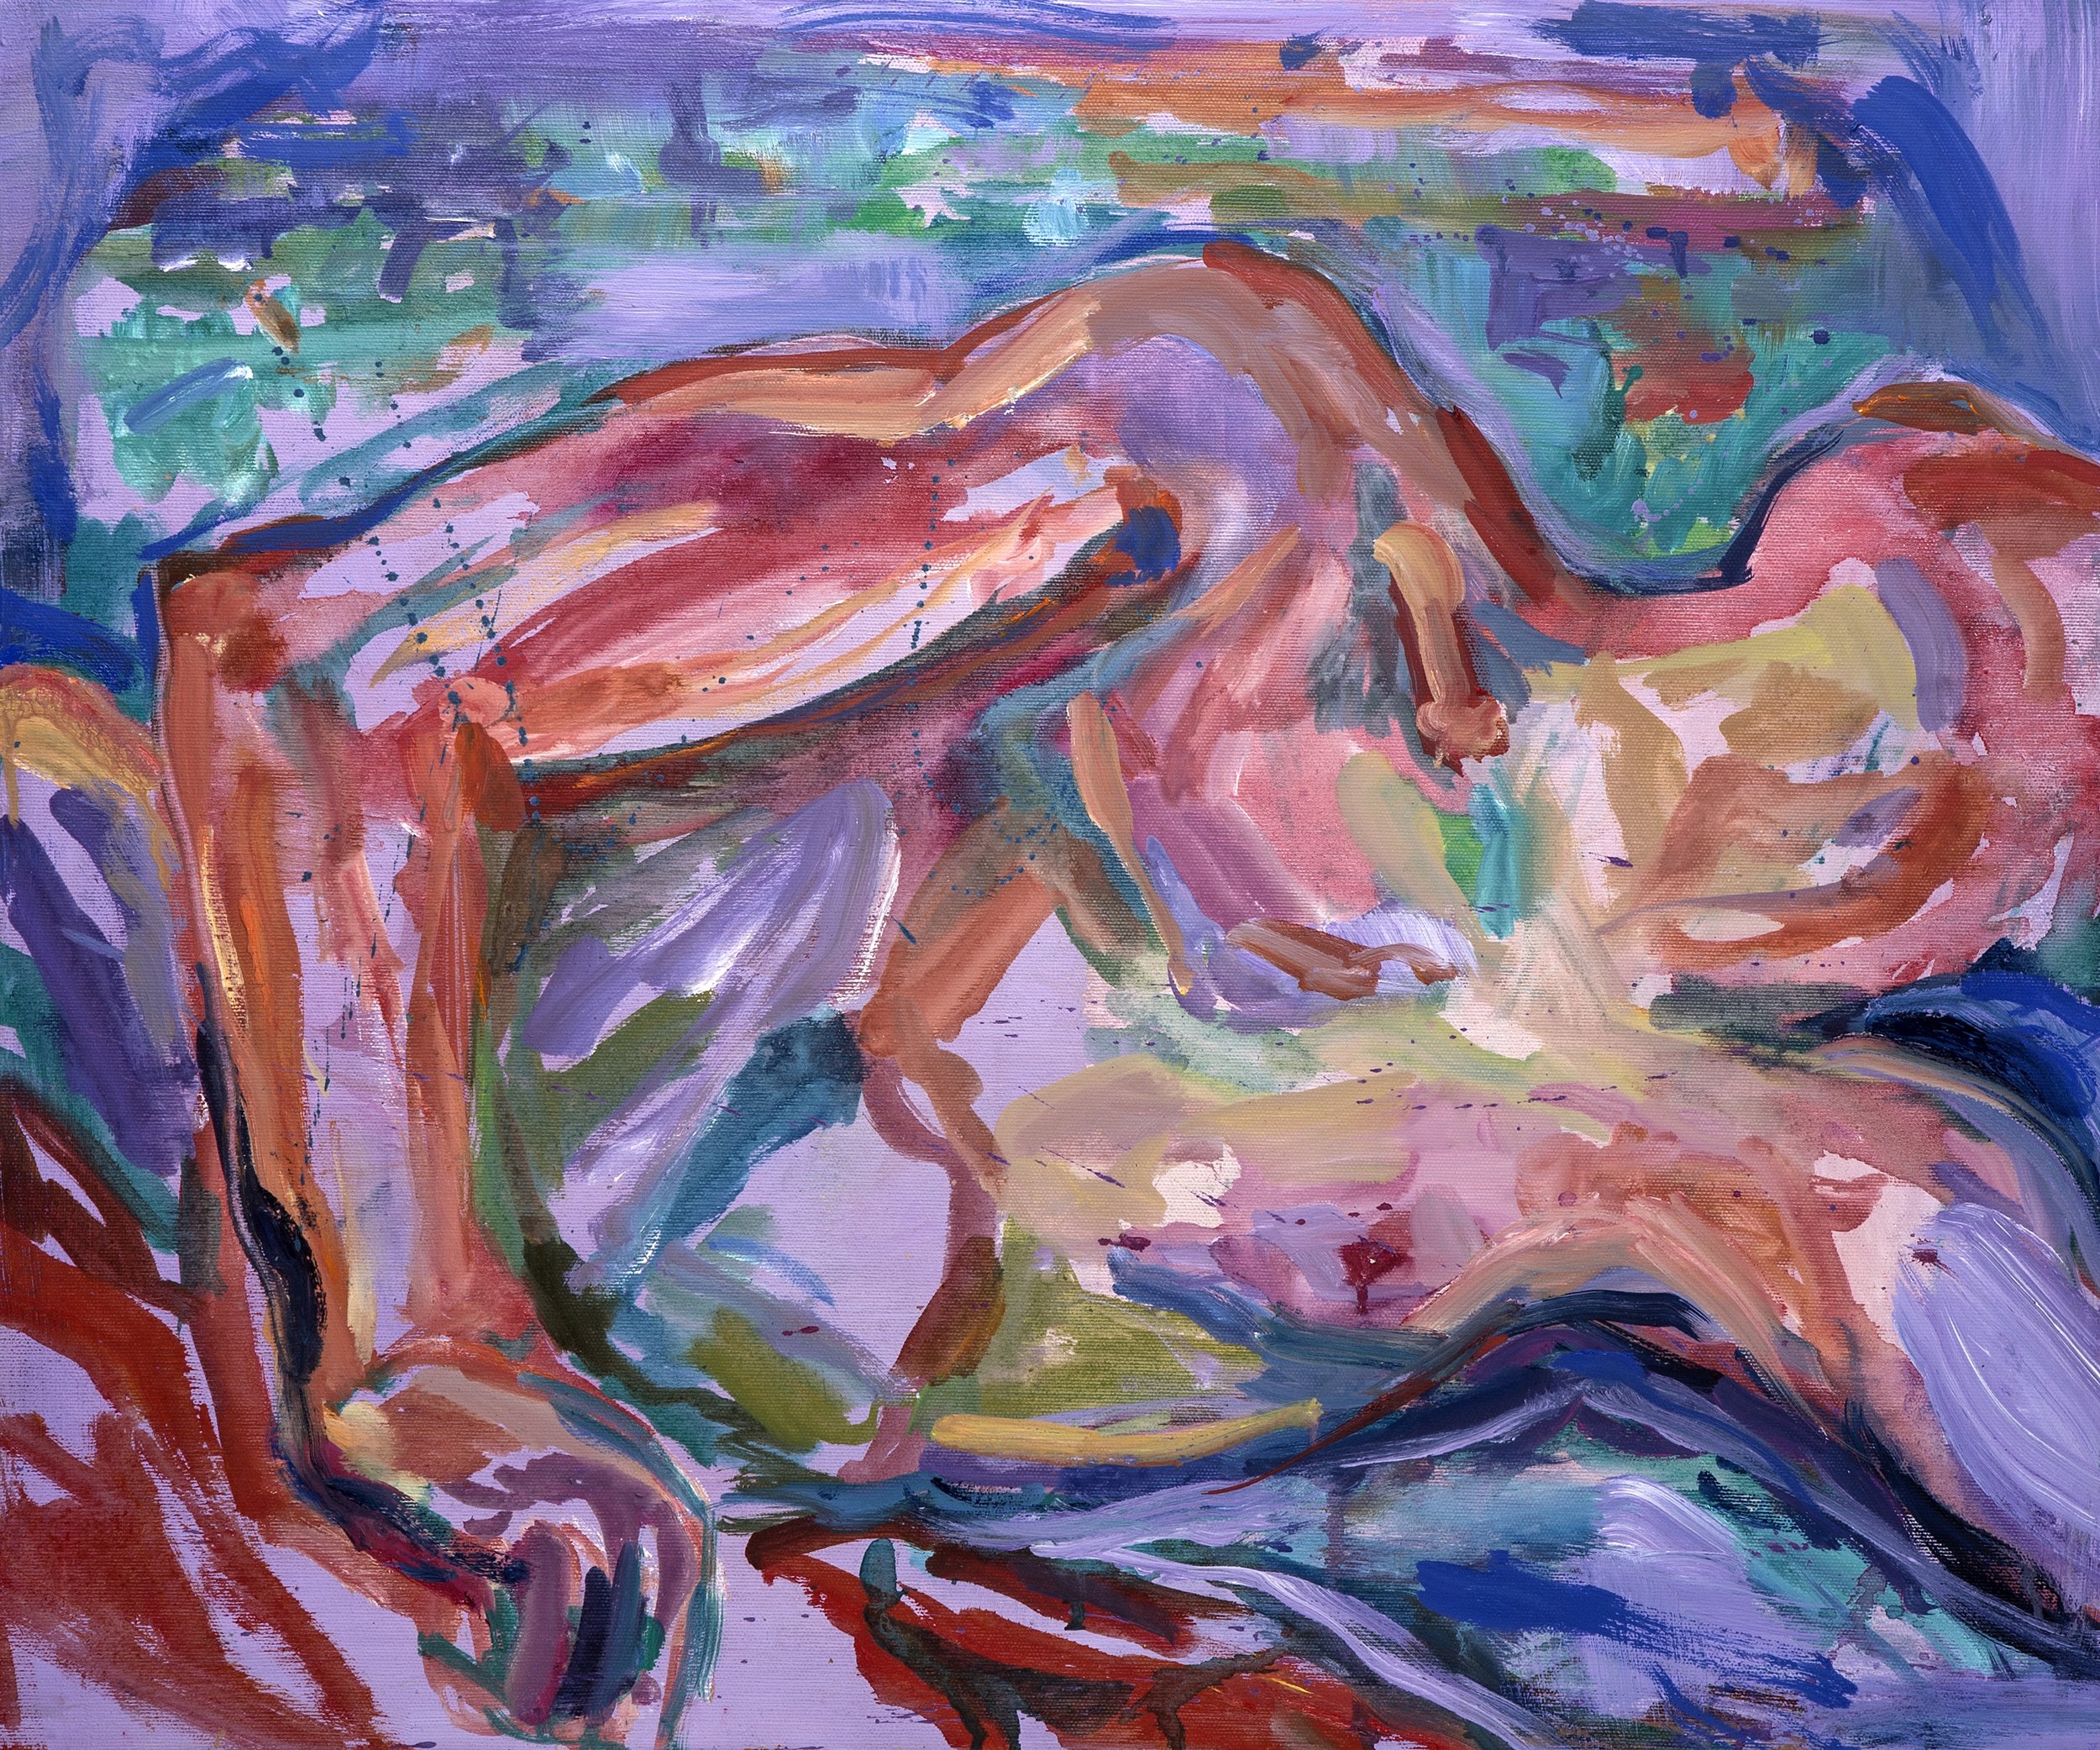 Paint as flesh, 2022, oil on canvas, 65 x 55 cm